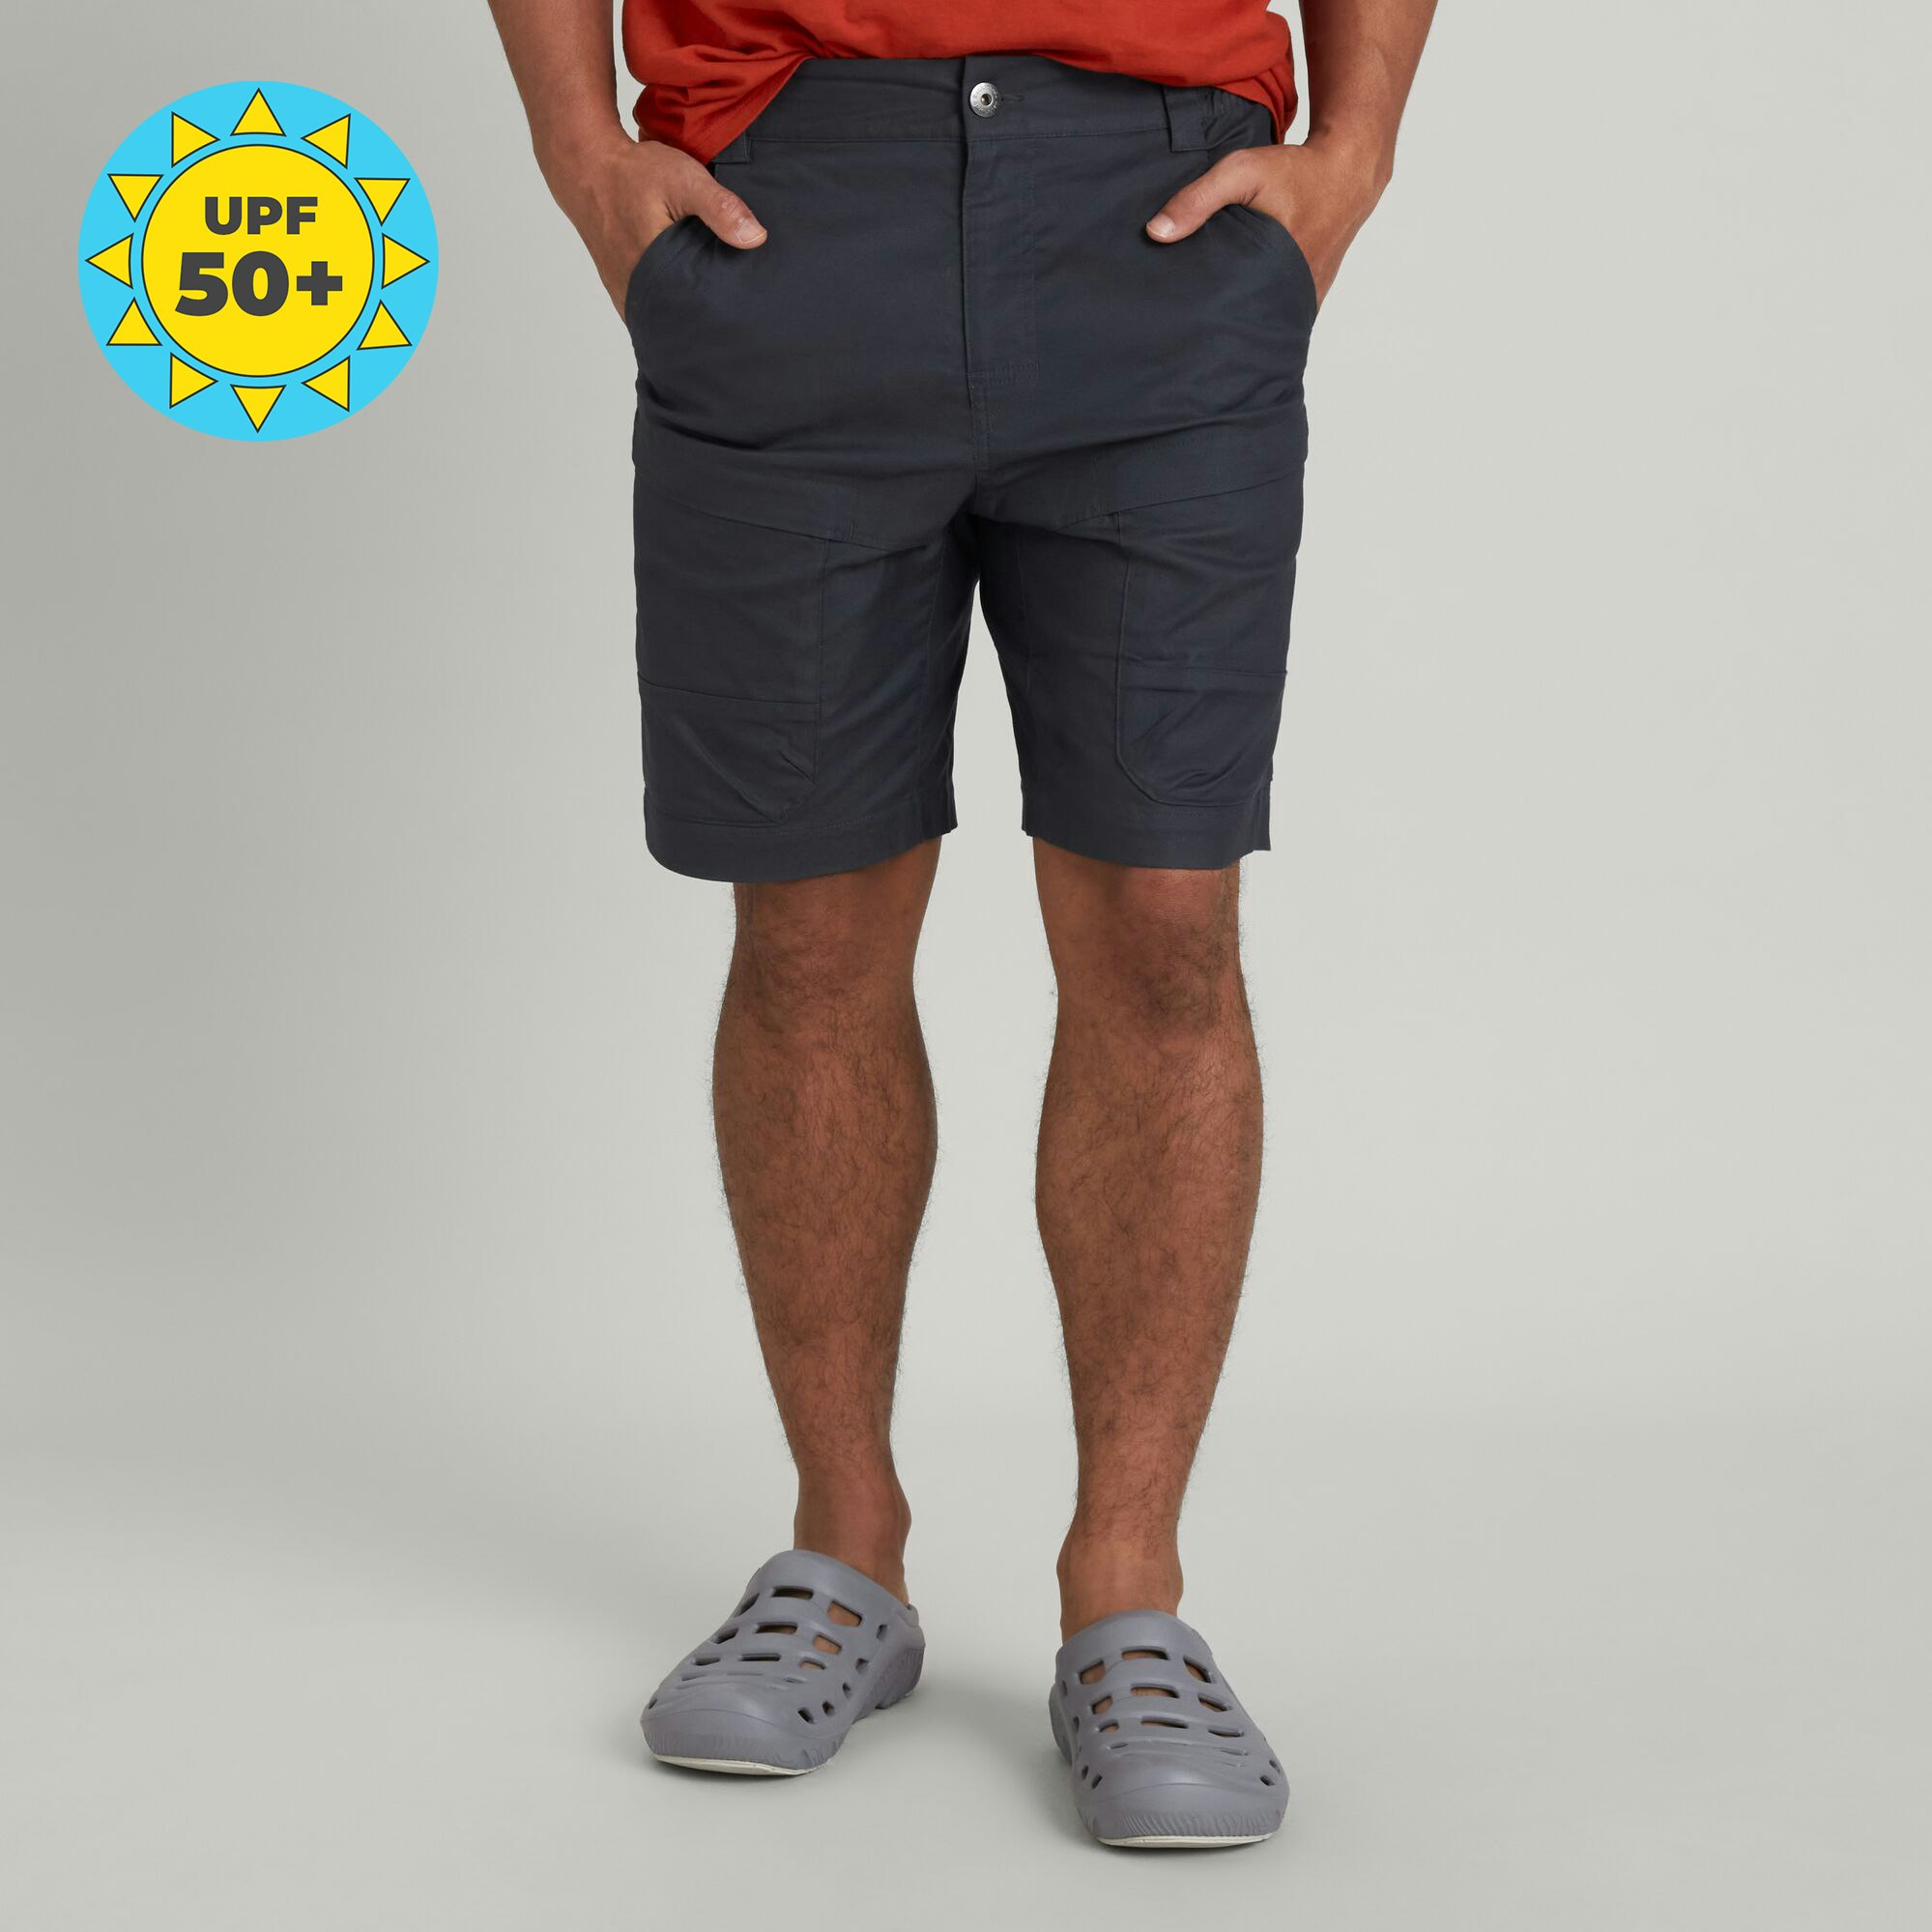 Men's cargo shorts